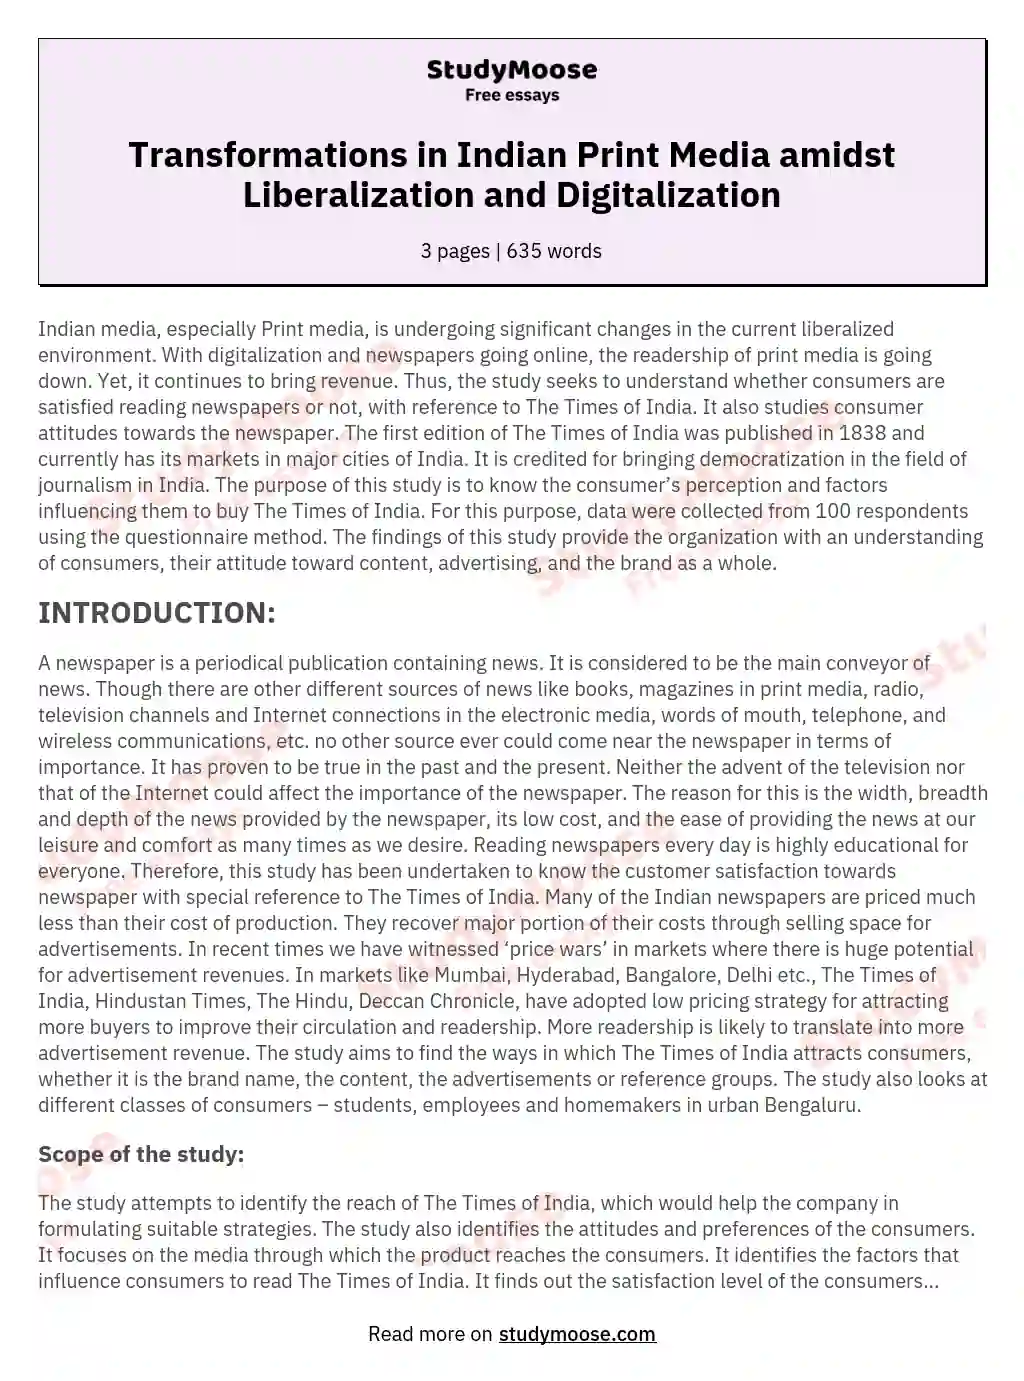 Transformations in Indian Print Media amidst Liberalization and Digitalization essay